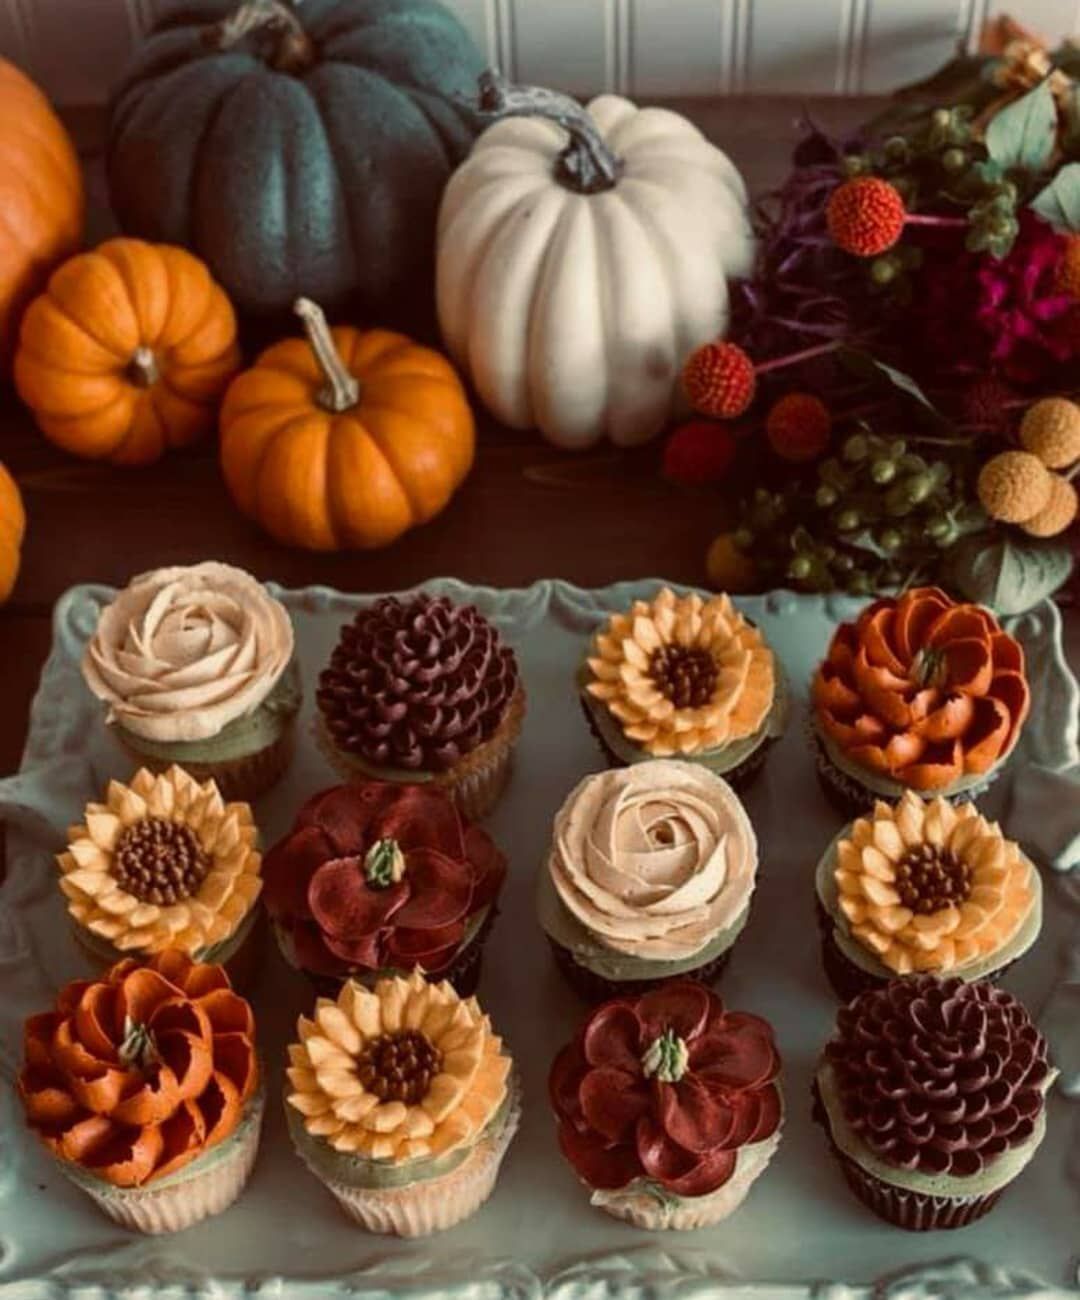 How beautiful are these cupcakes!!! #fall #fallnights #falllove #fallweather